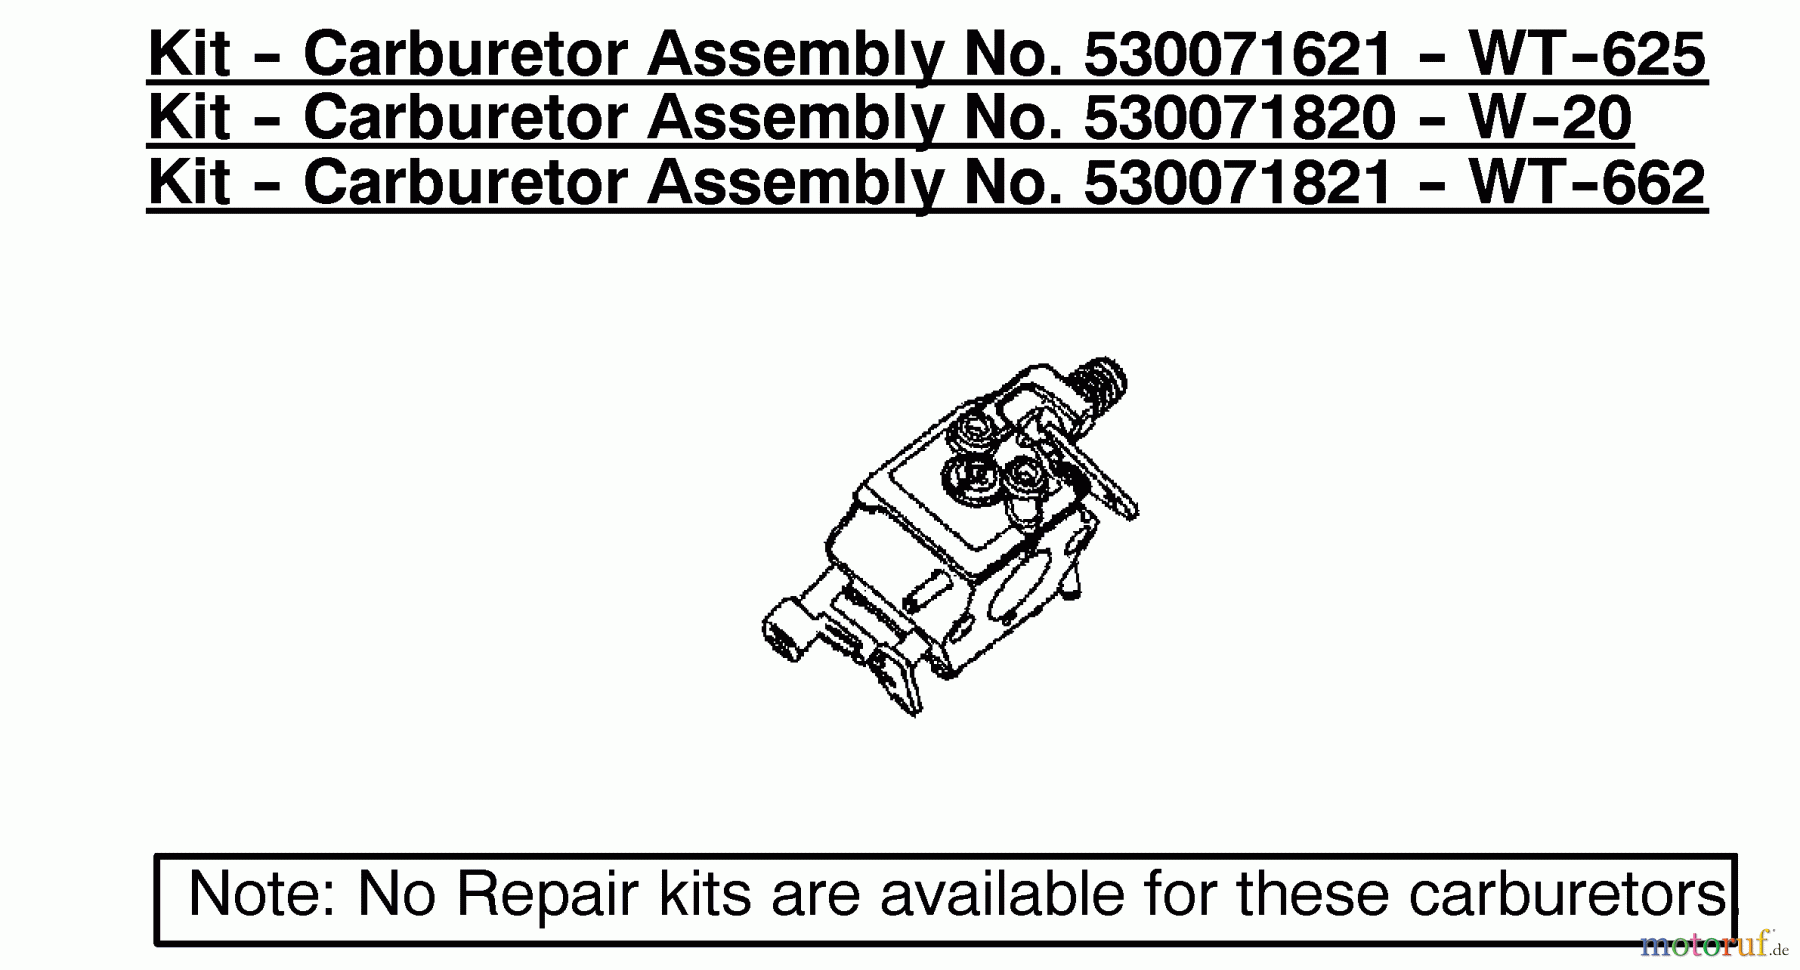  Poulan / Weed Eater Motorsägen 2450 (Type 3) - Poulan Woodmaster Chainsaw Kit - Carburetor Assembly 530071621/530071820/530071821